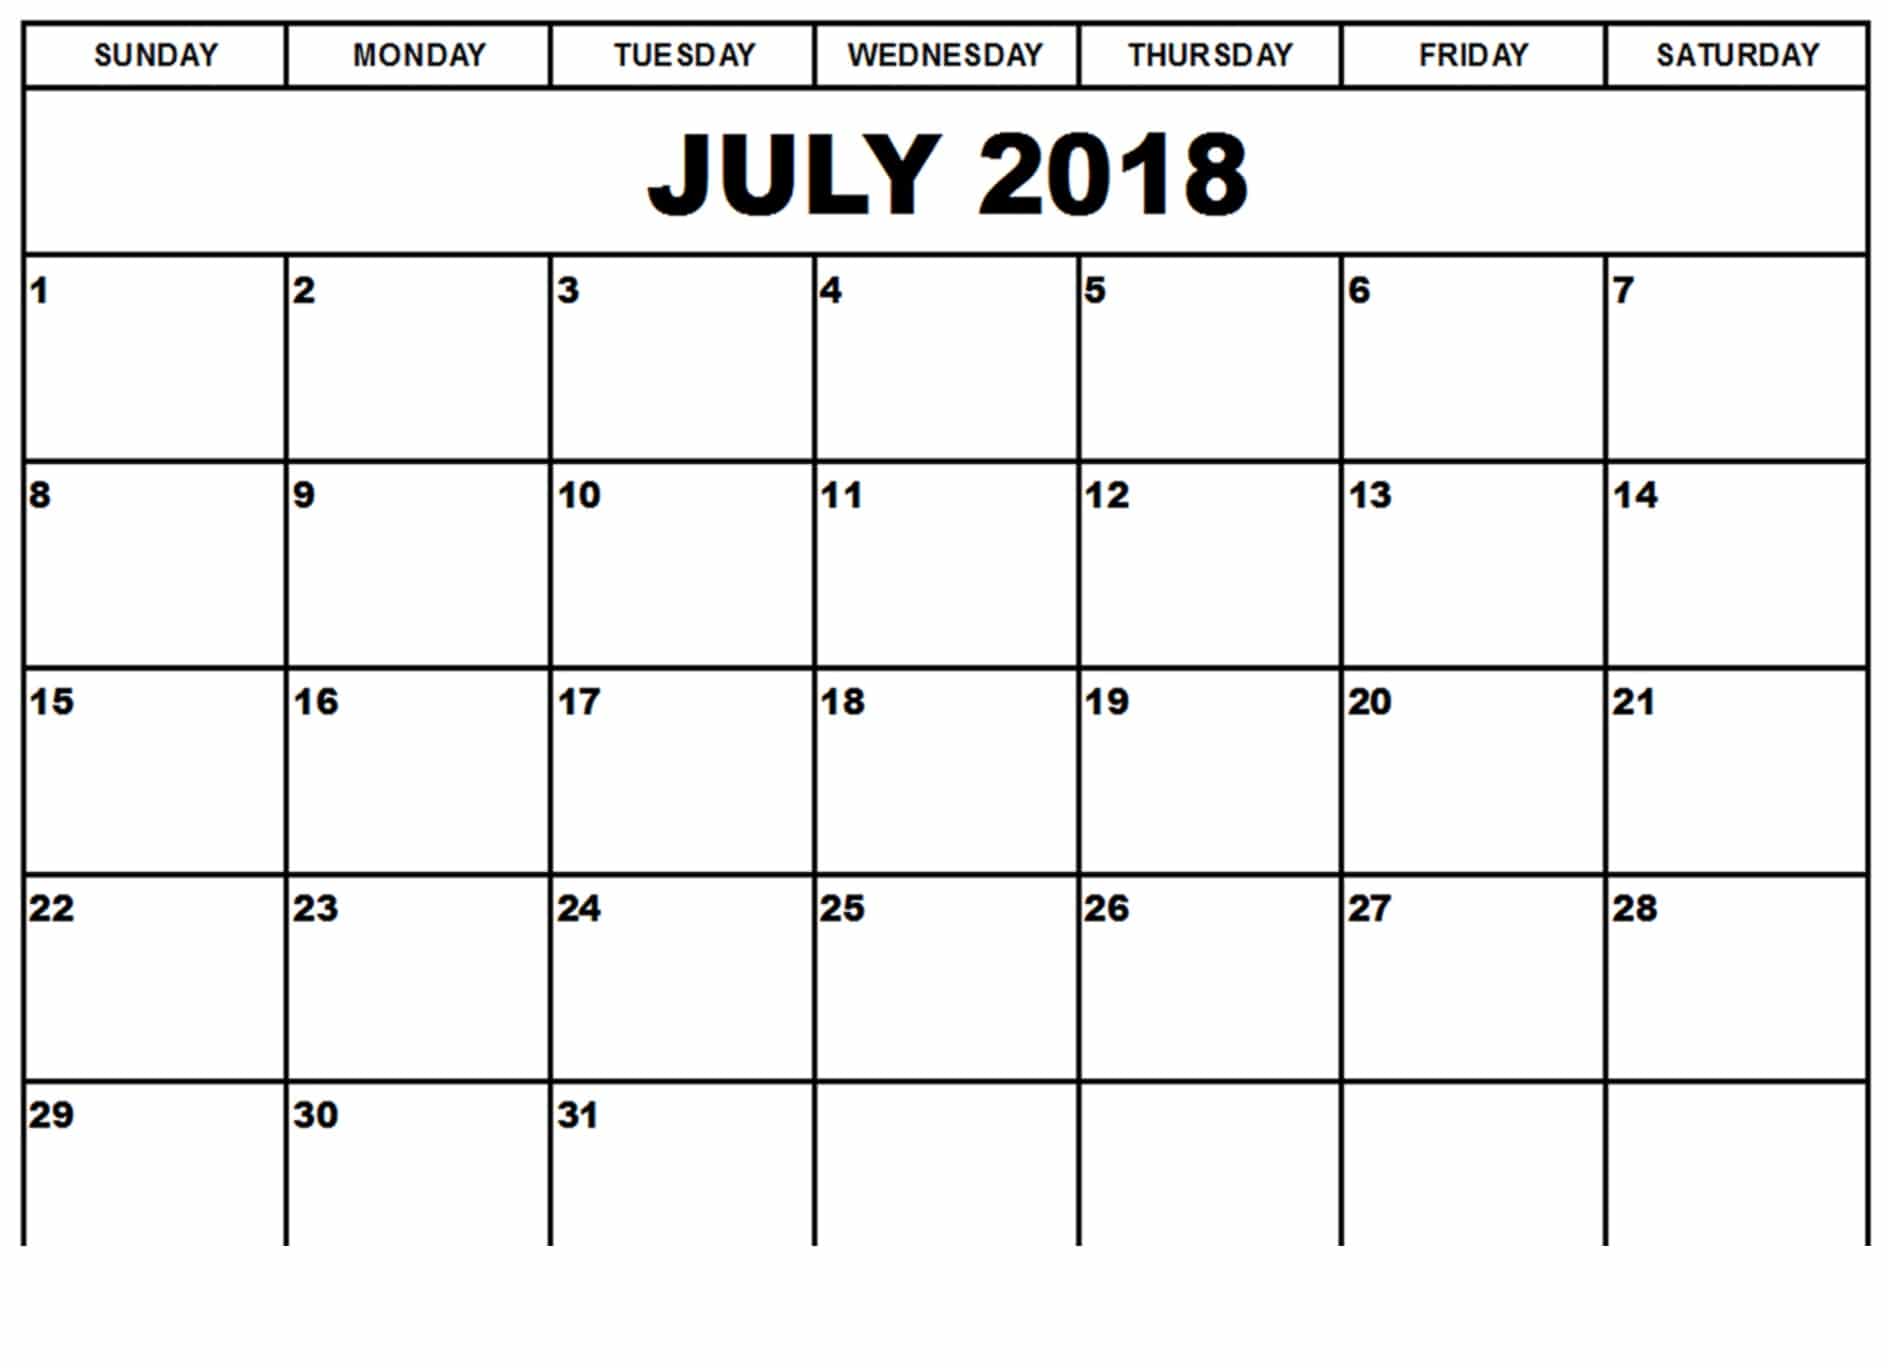 calendar-july-2018-printable-with-holidays-oppidan-library